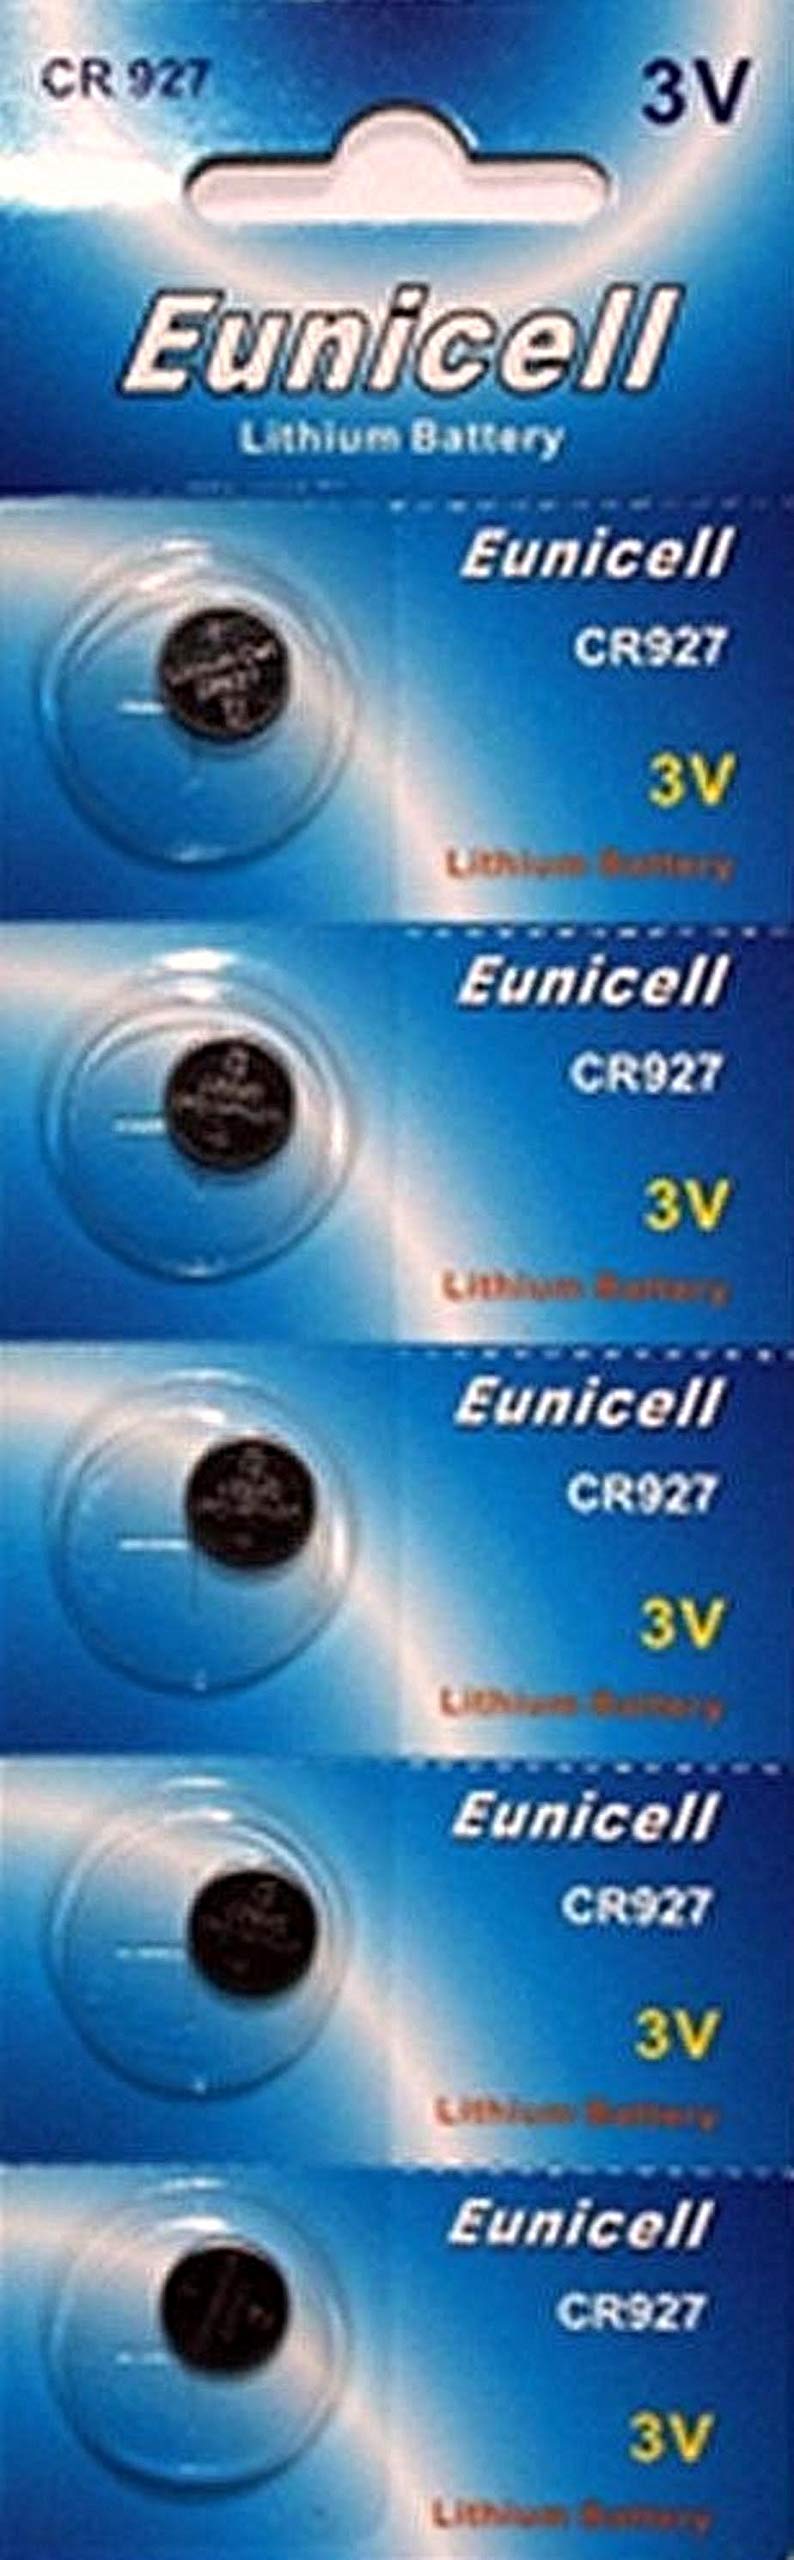 Eunicell CR927 Lithium Blister Pack 3V 3 Volt Coin Cell Batteries (40 pcs)